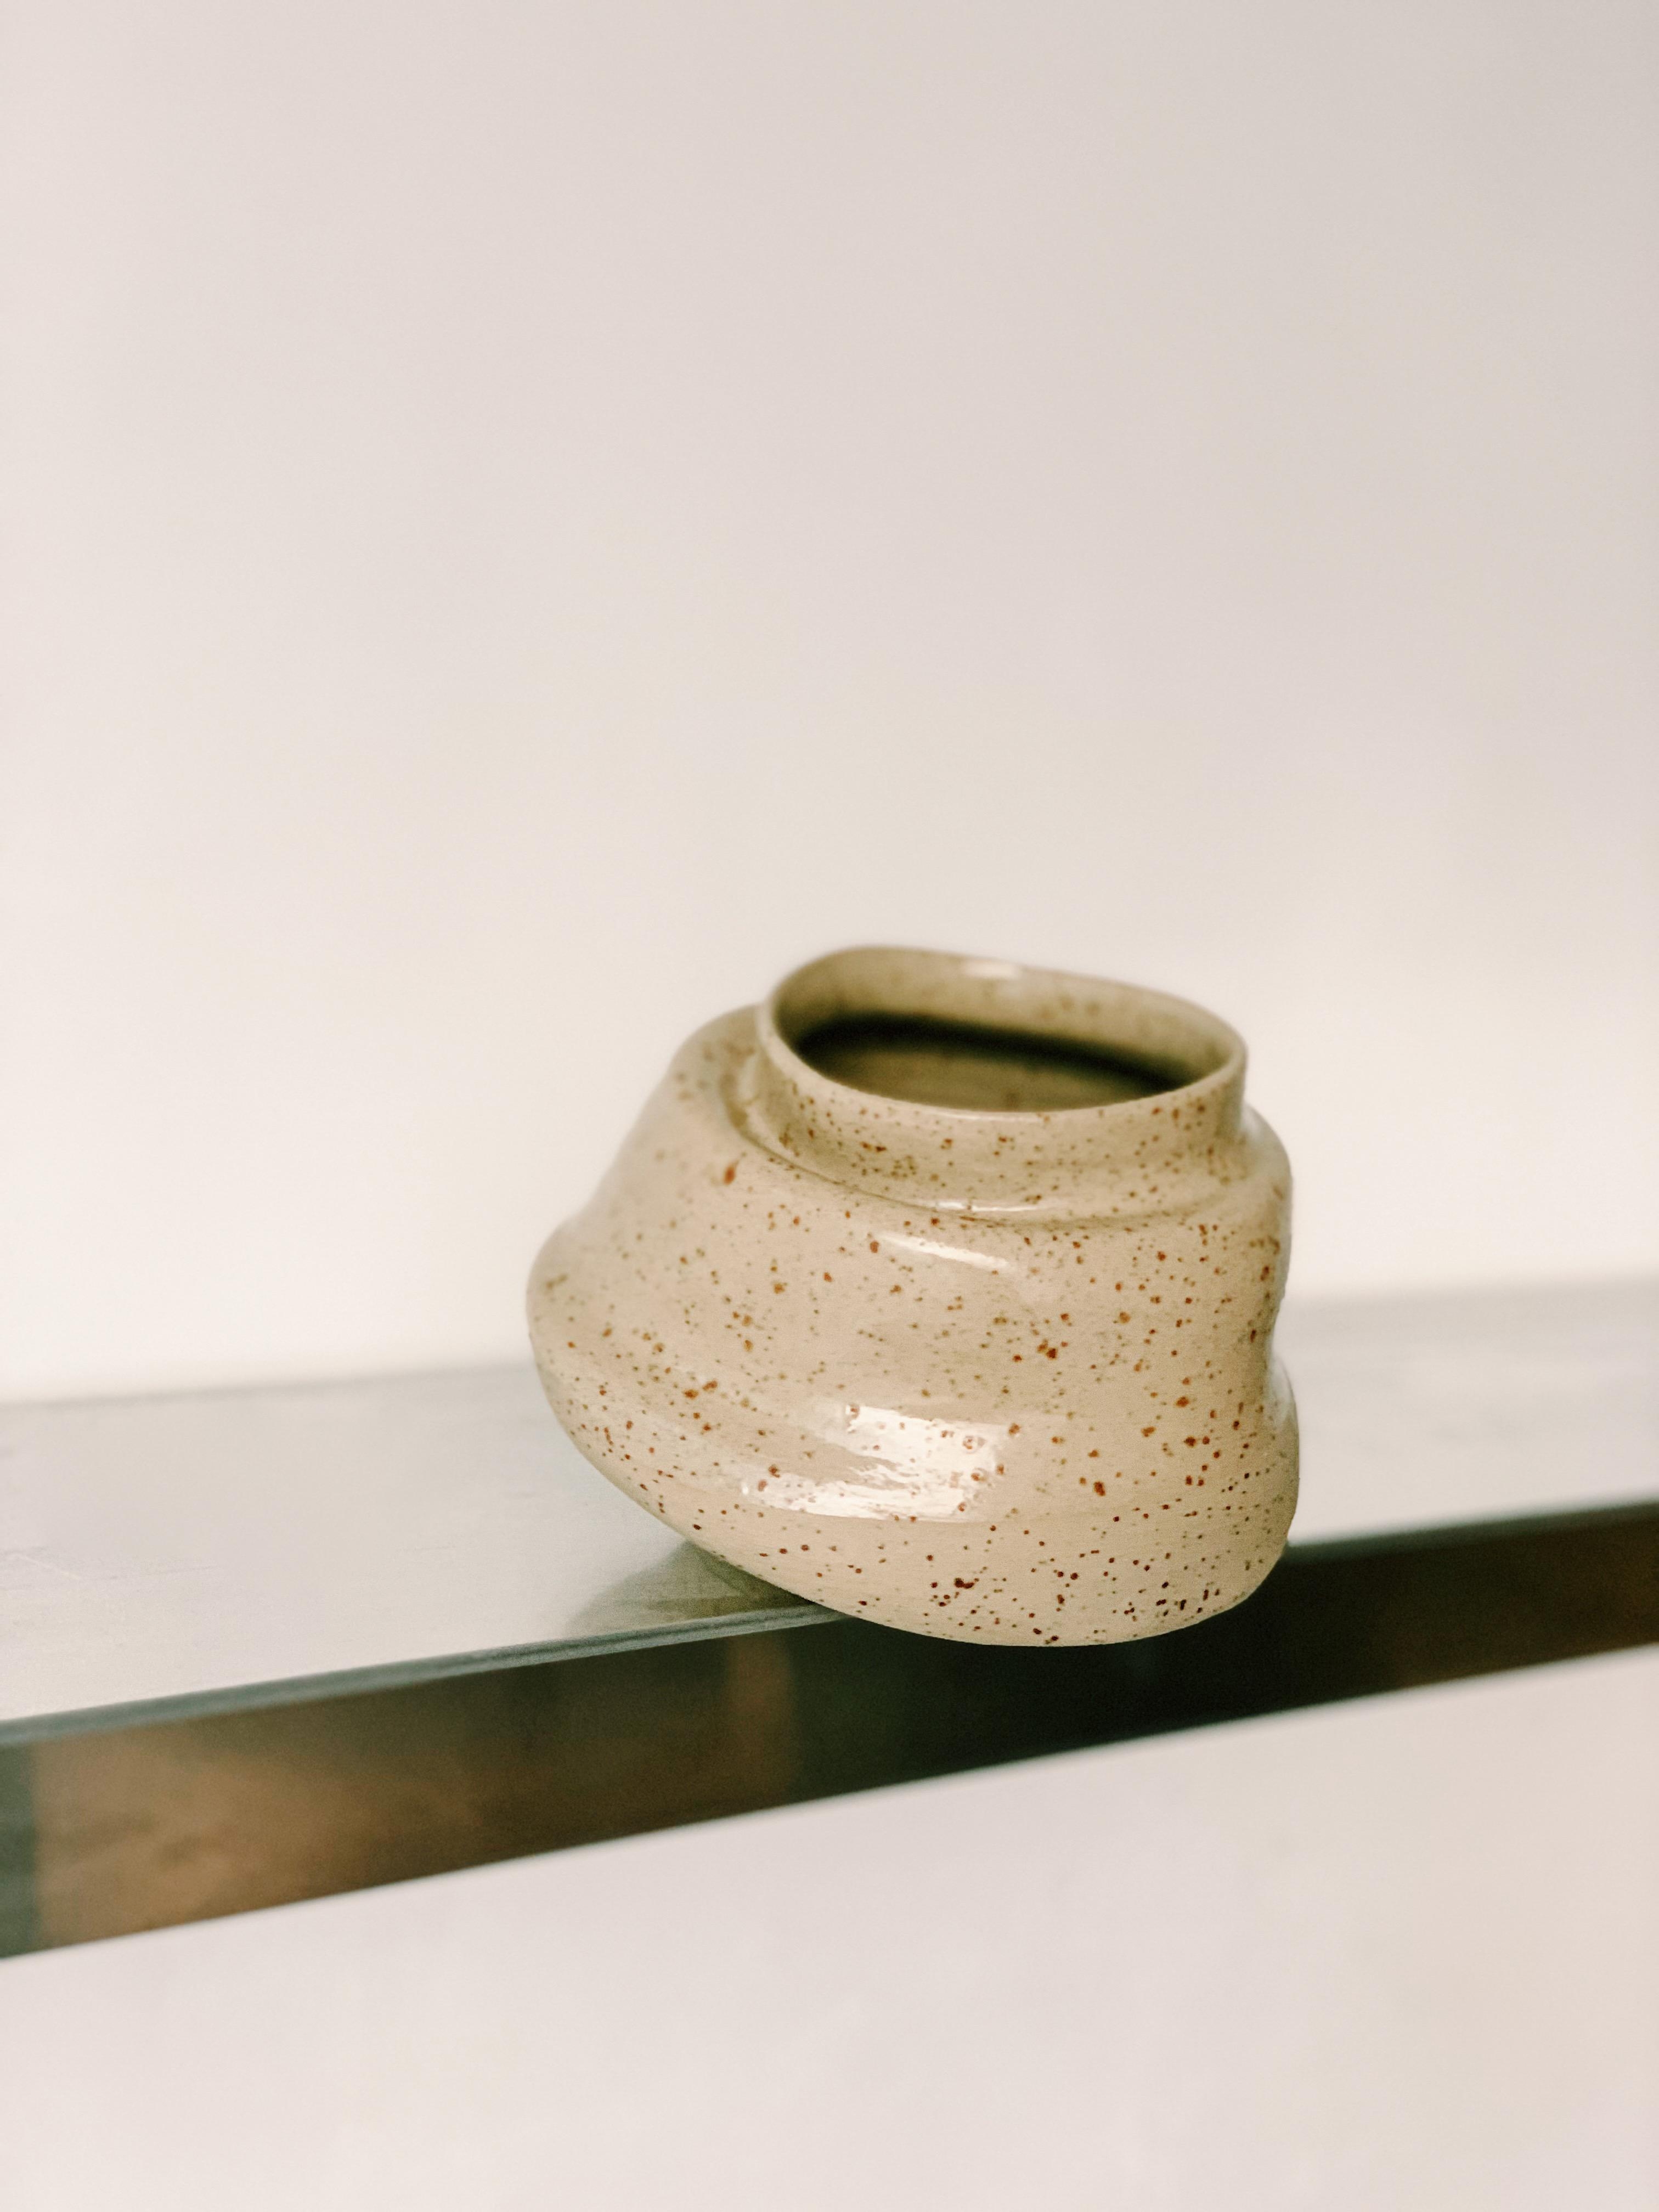 #uniqueshape #failnotfailure #interiordesign #vase #handmade #style #ceramics #skandistyle #couchliebt